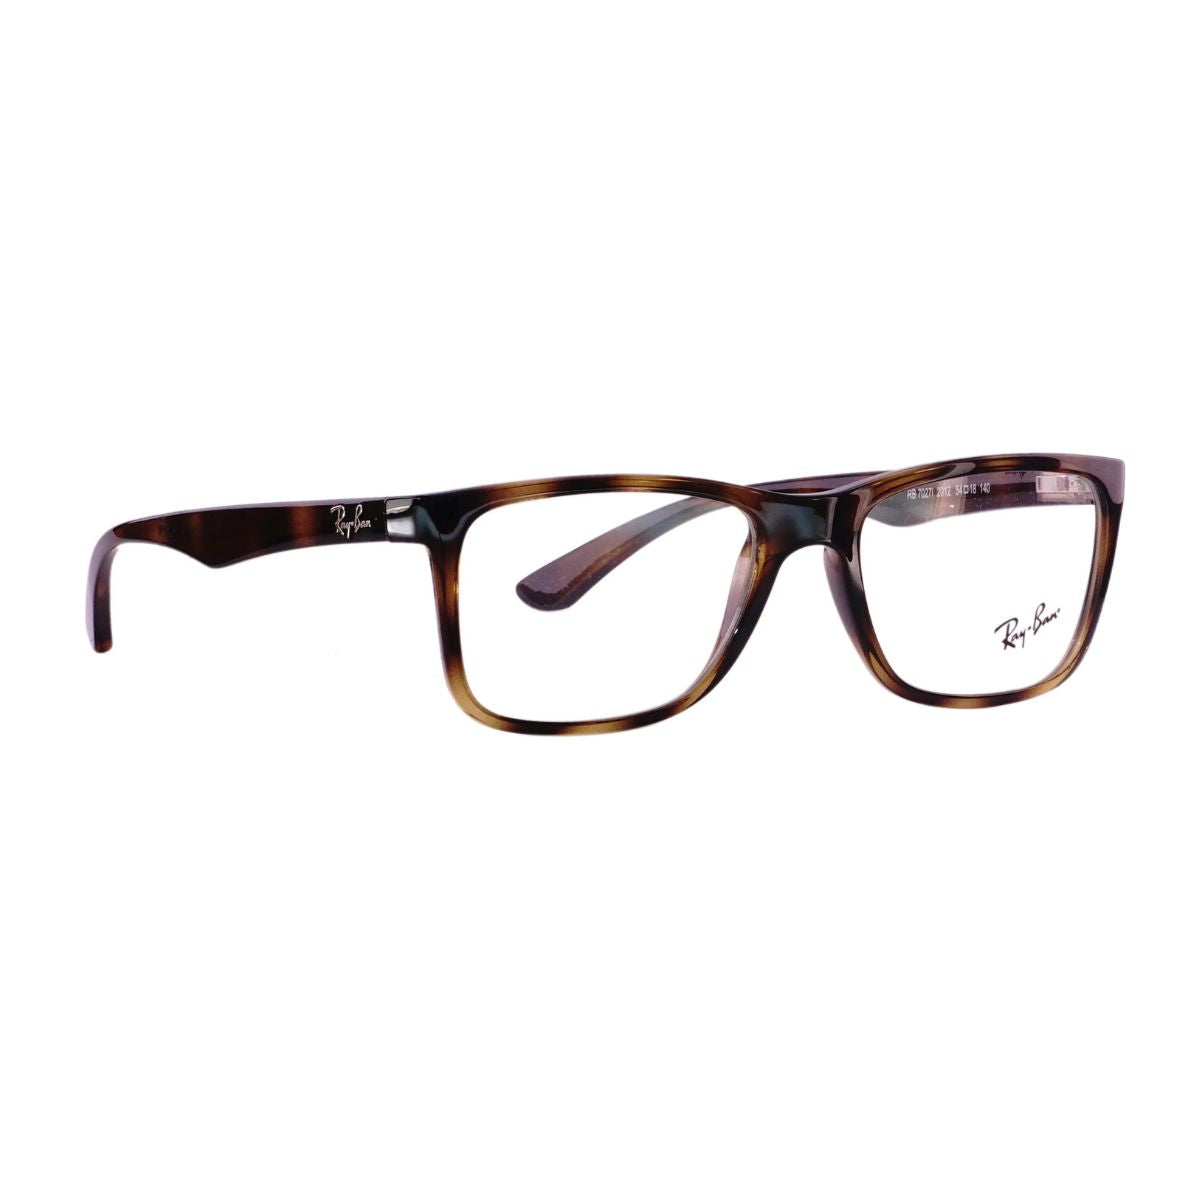 "best Rayban 7027I 2012 stylish eyesight frame for men's and women's at optorium"